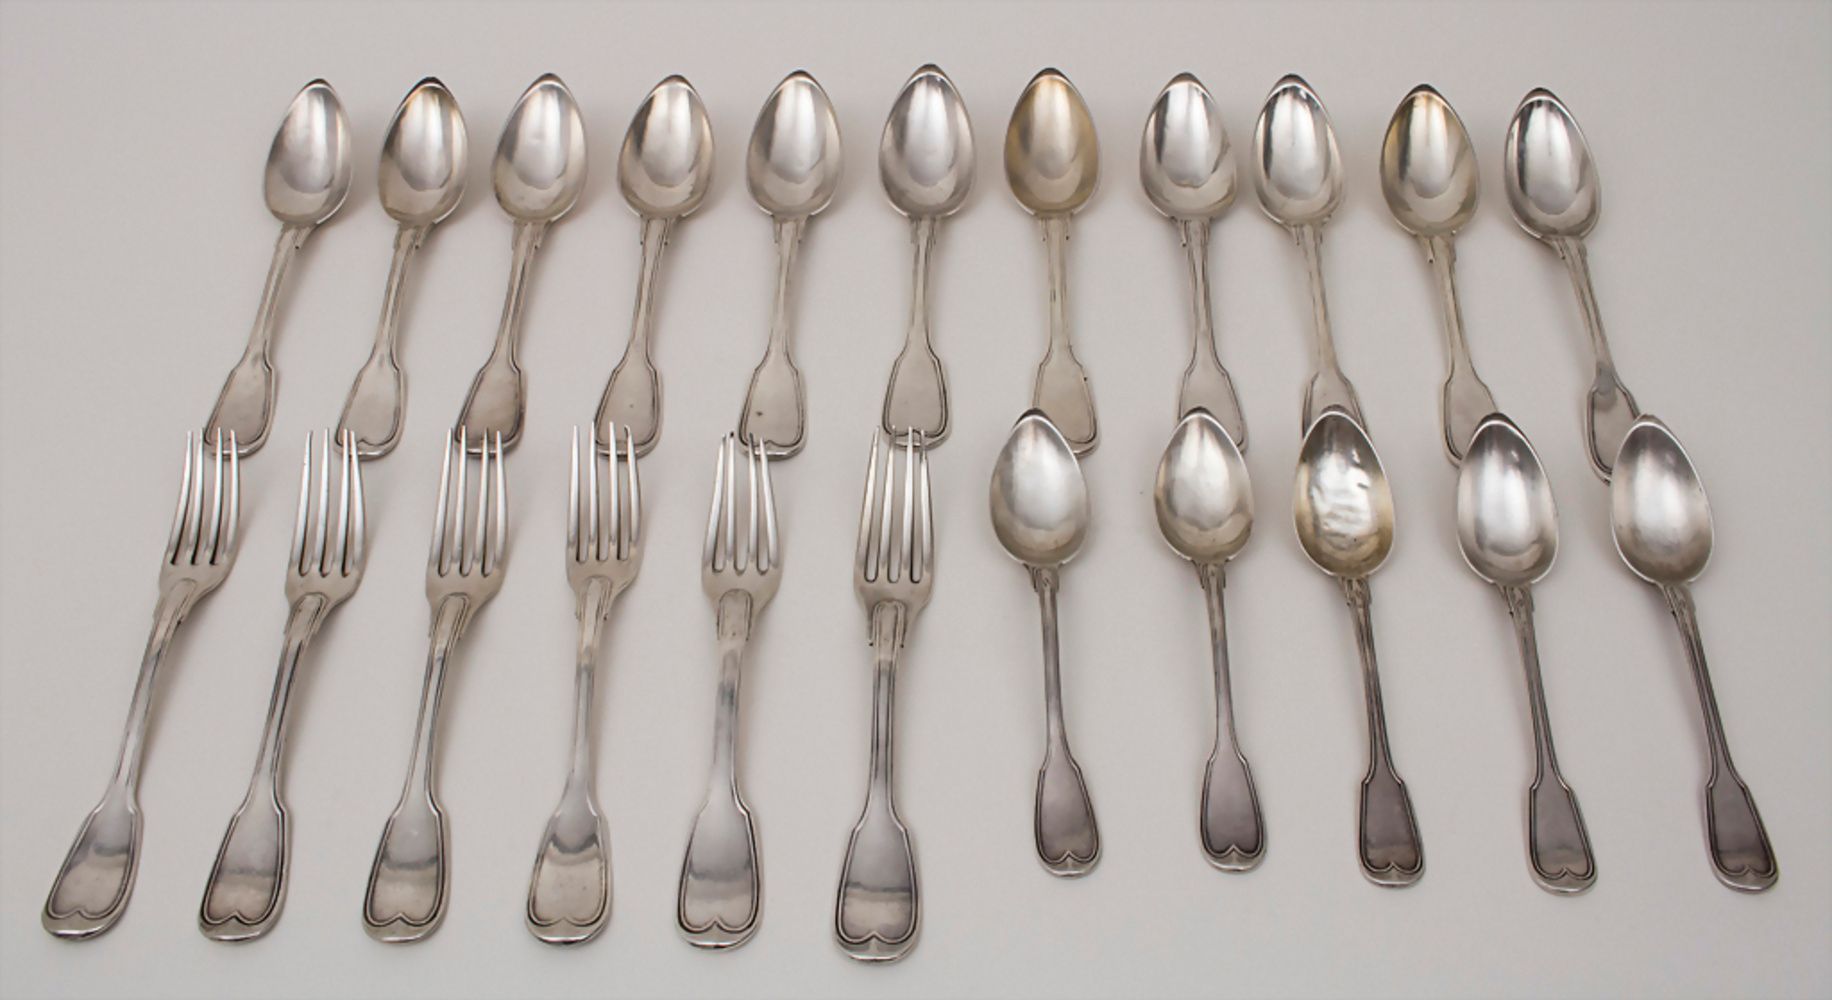 Restbesteck / Silver cutlery, Paris, 19. Jh 材料: 银950/1000, 16个勺子和6个叉子,
印记: 保证标记、&hellip;